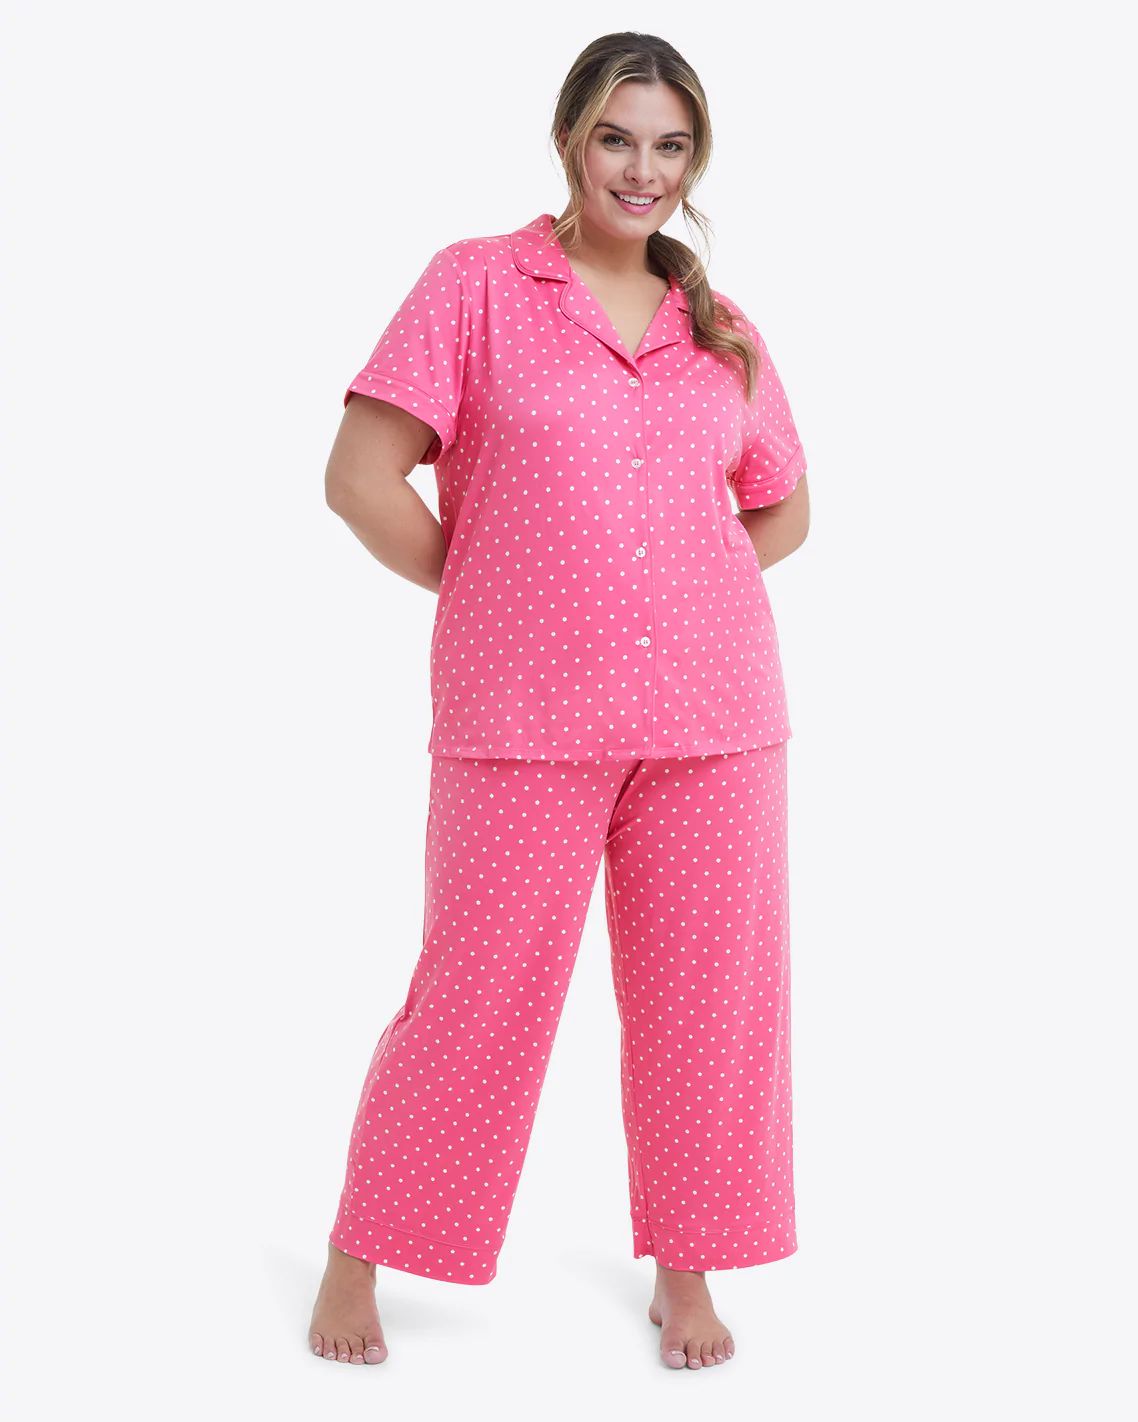 Linda Pajama Set in Pink Polka Dot | Draper James (US)